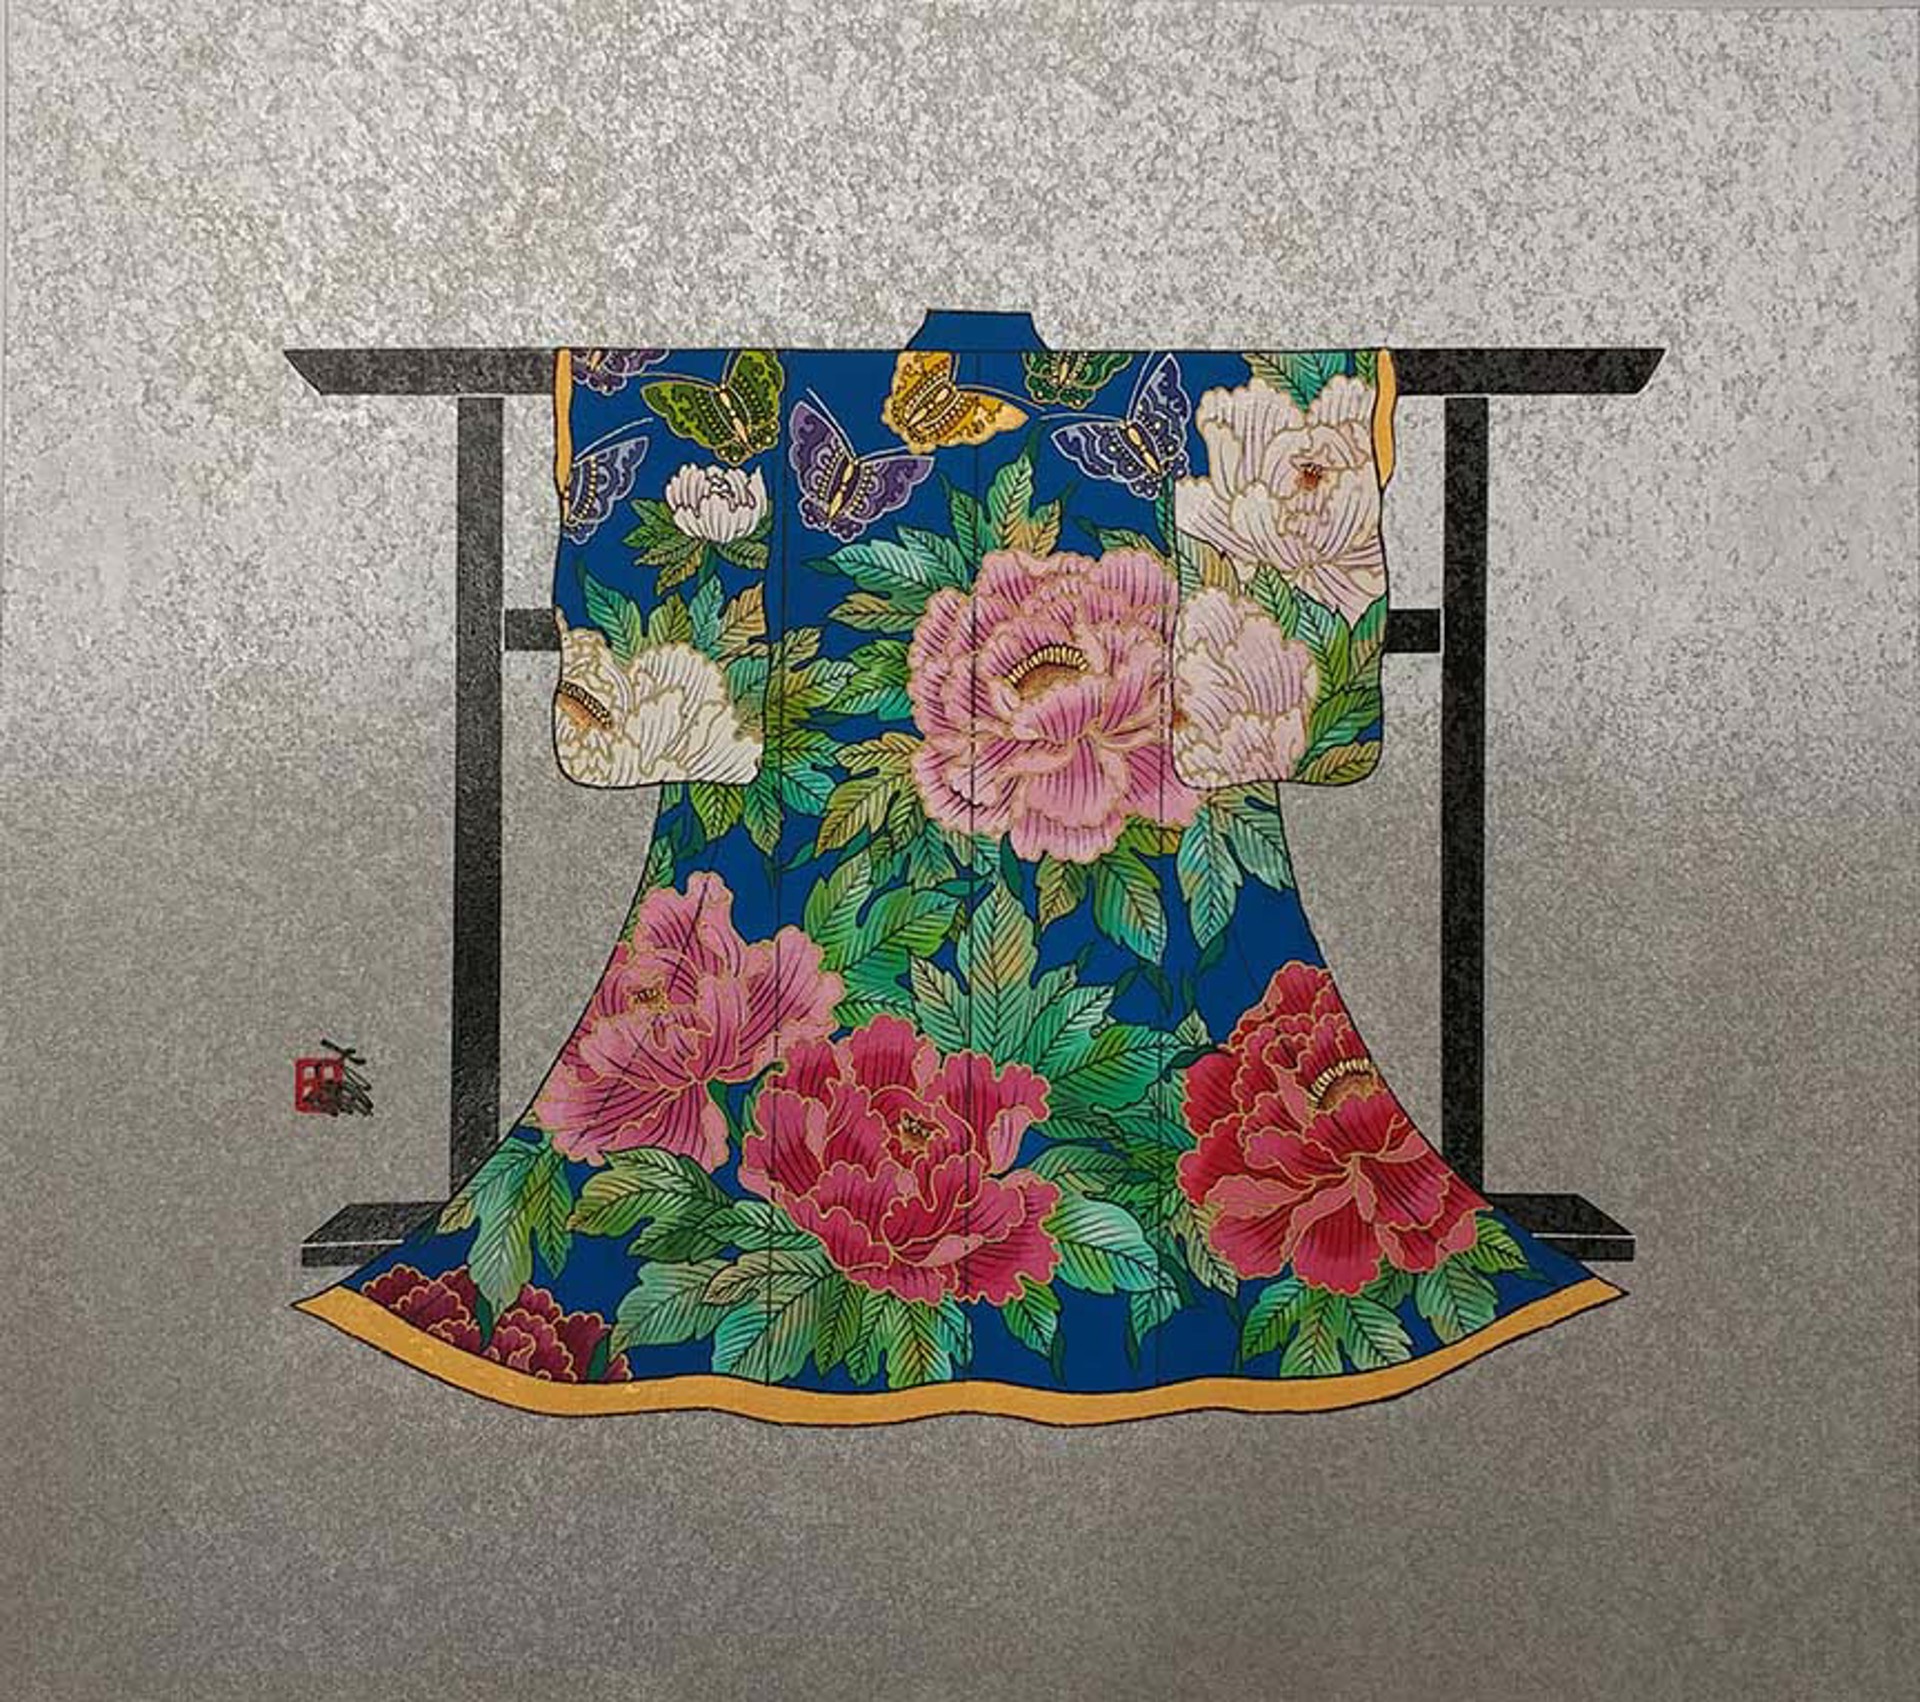 Fantasia Kimono 2 by Hisashi Otsuka